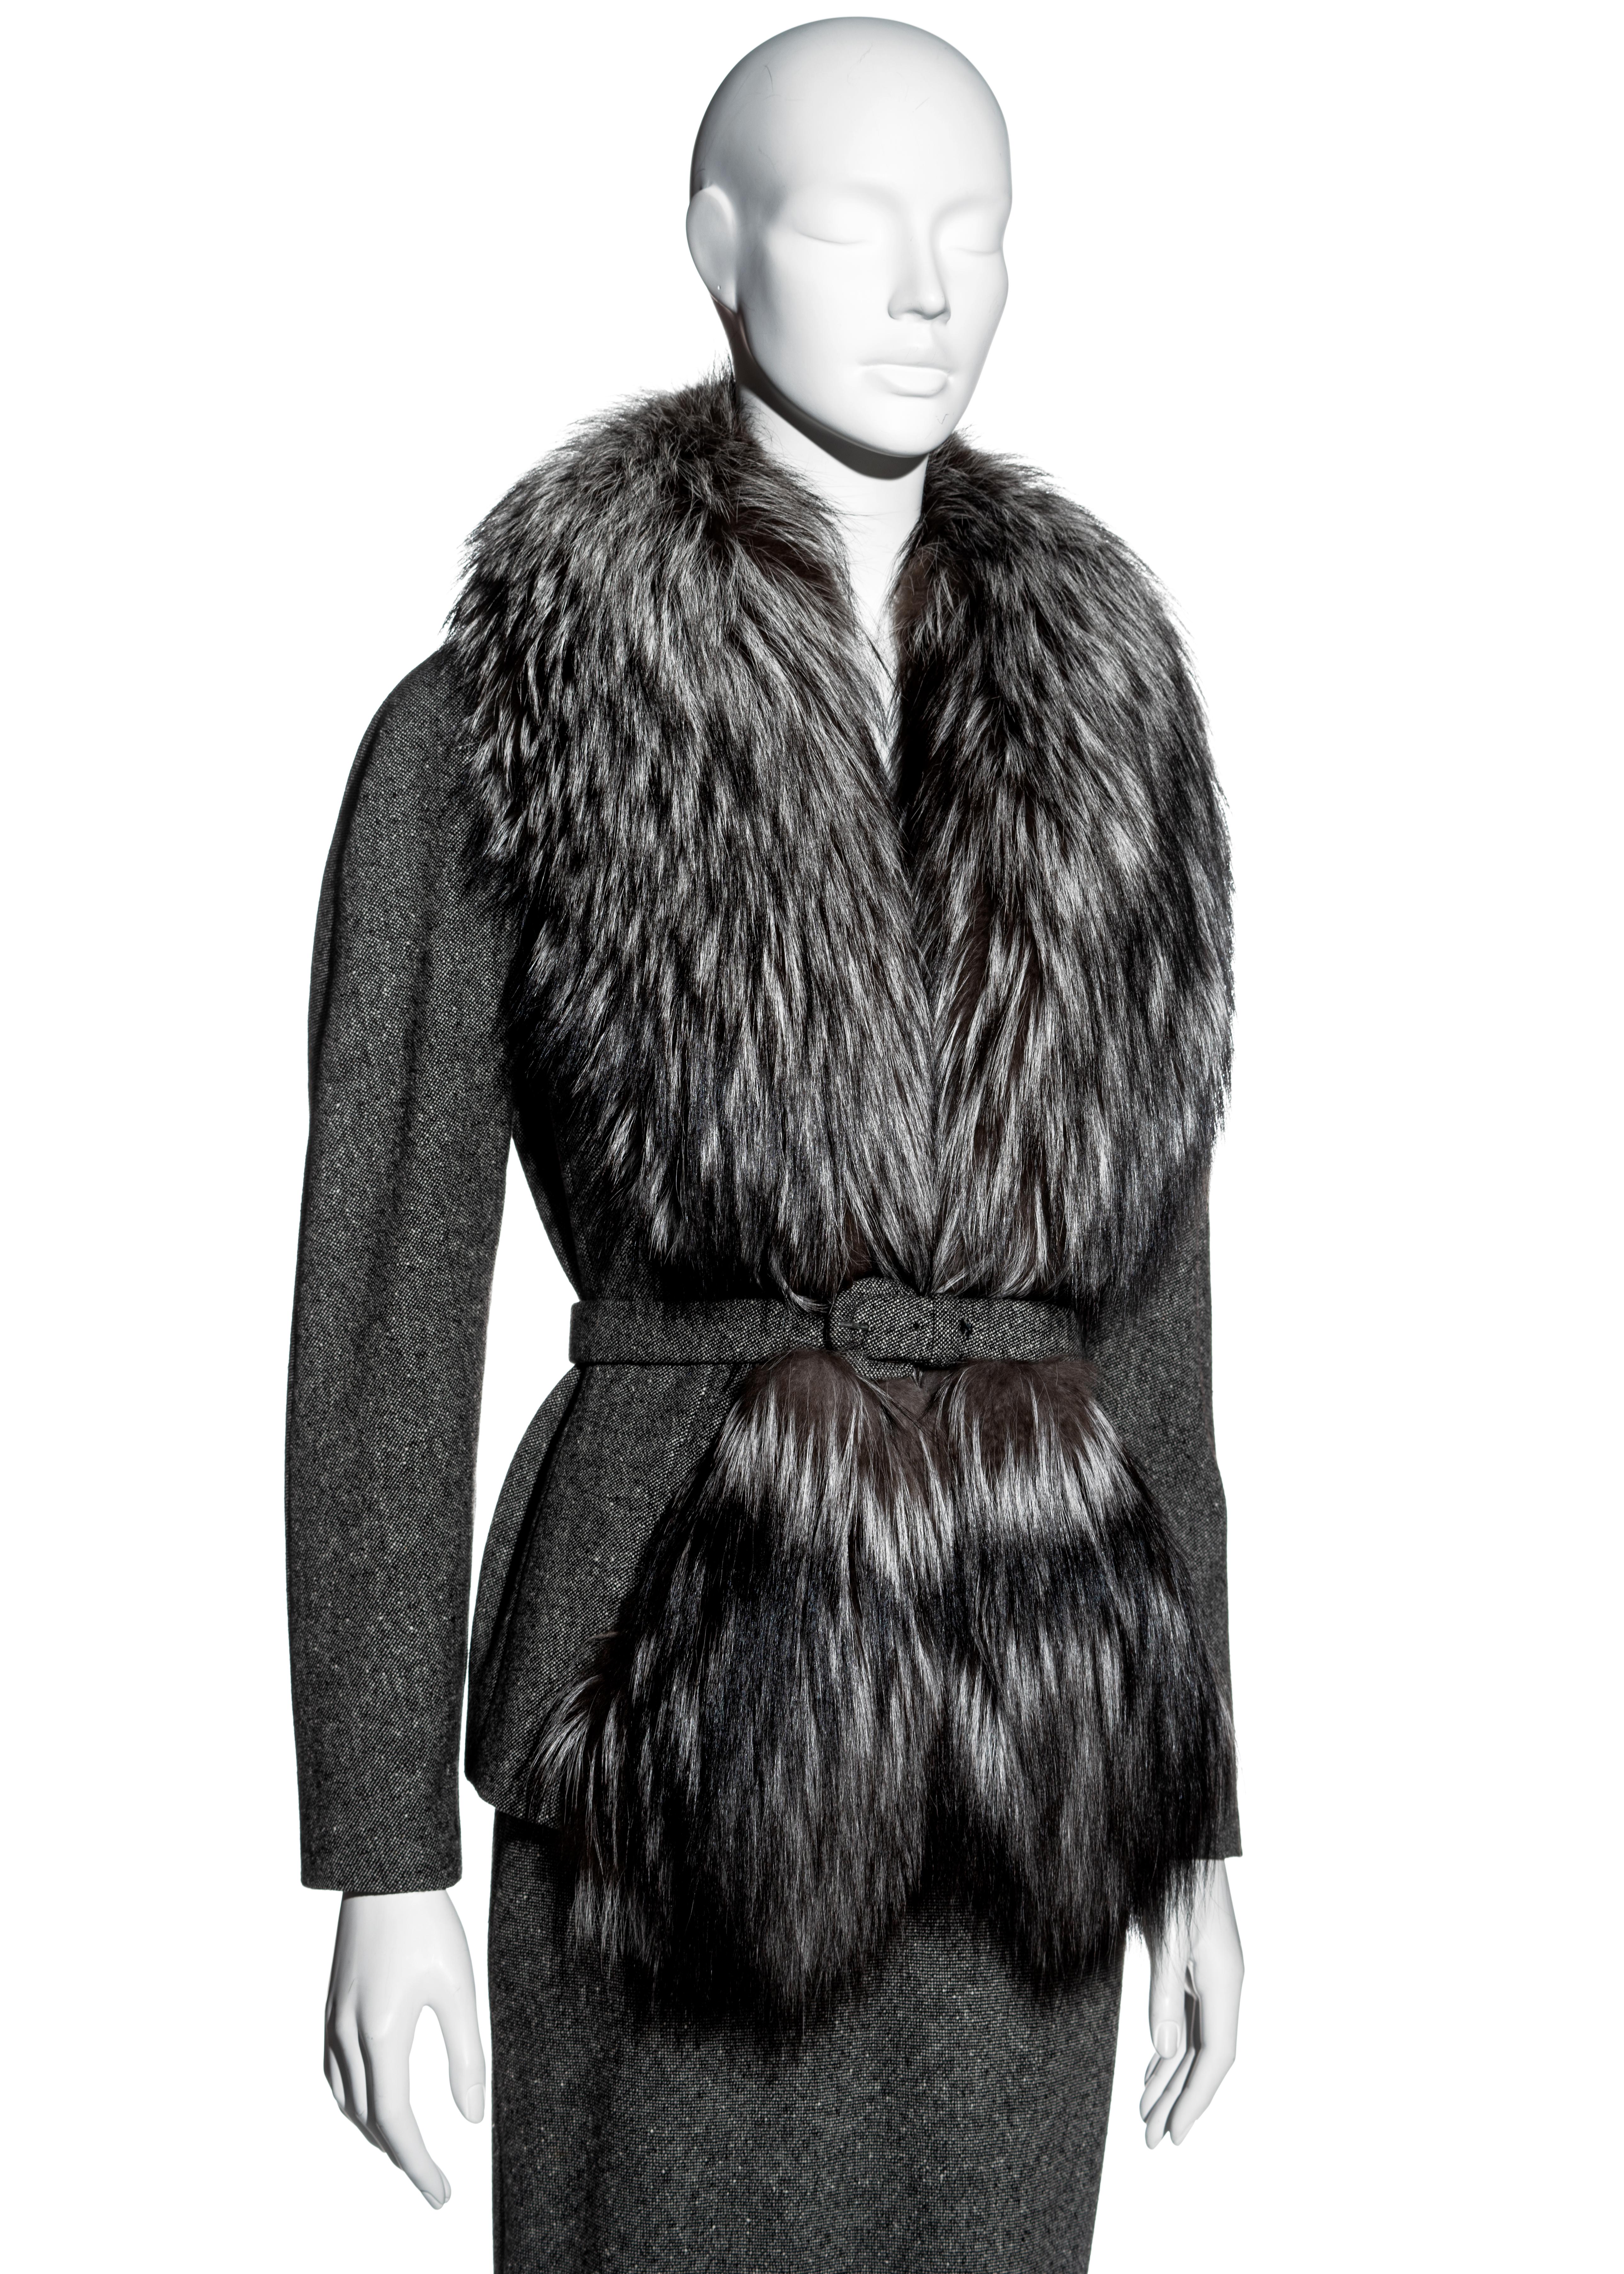 Black Christian Dior by John Galliano grey tweed maxi skirt suit with fox fur, fw 1998